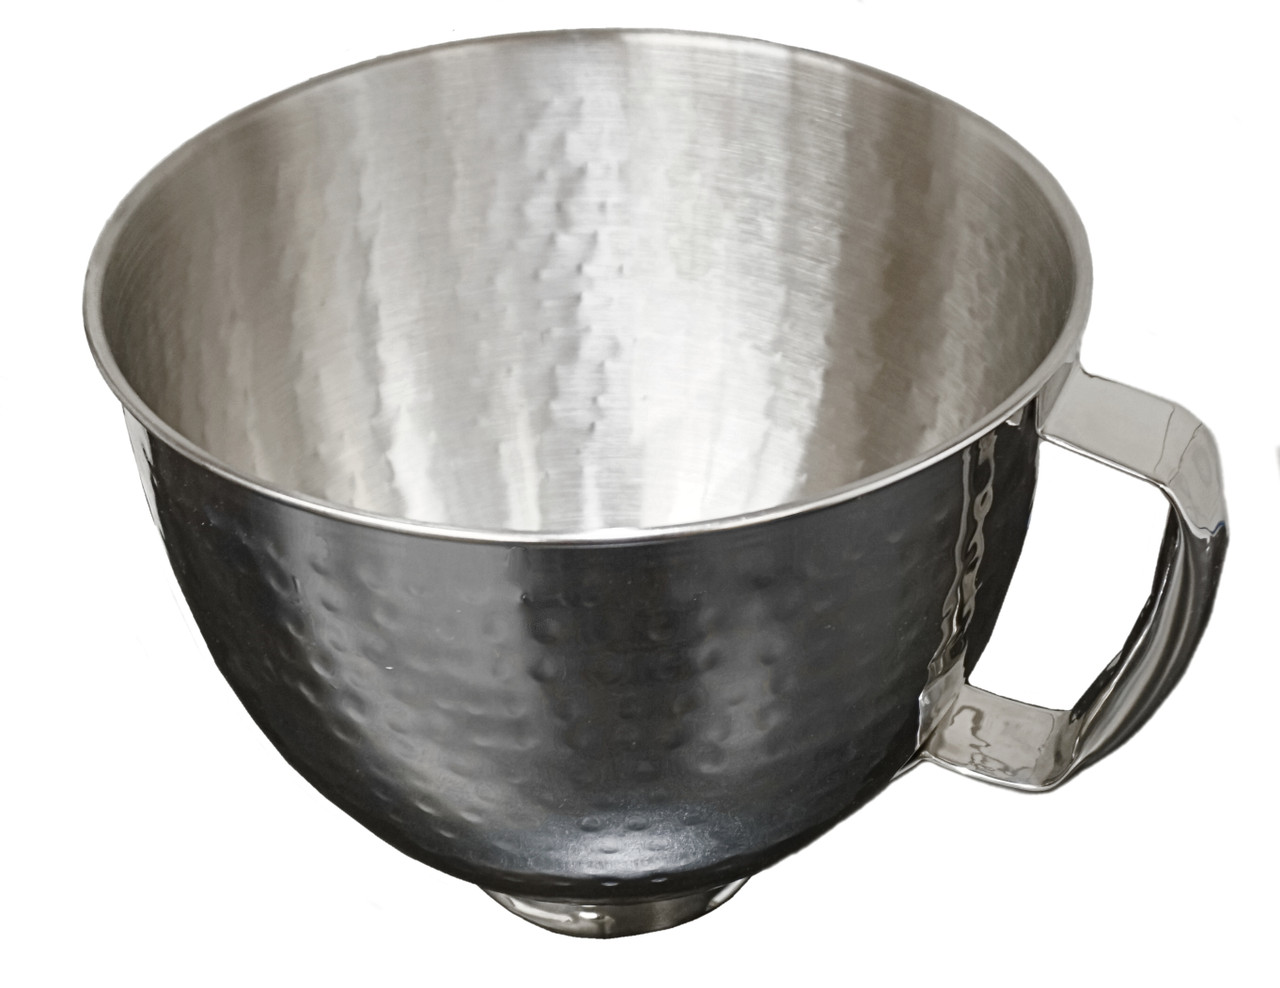 KitchenAid K5THSBP 5 qt Stainless Steel Bowl/Handle